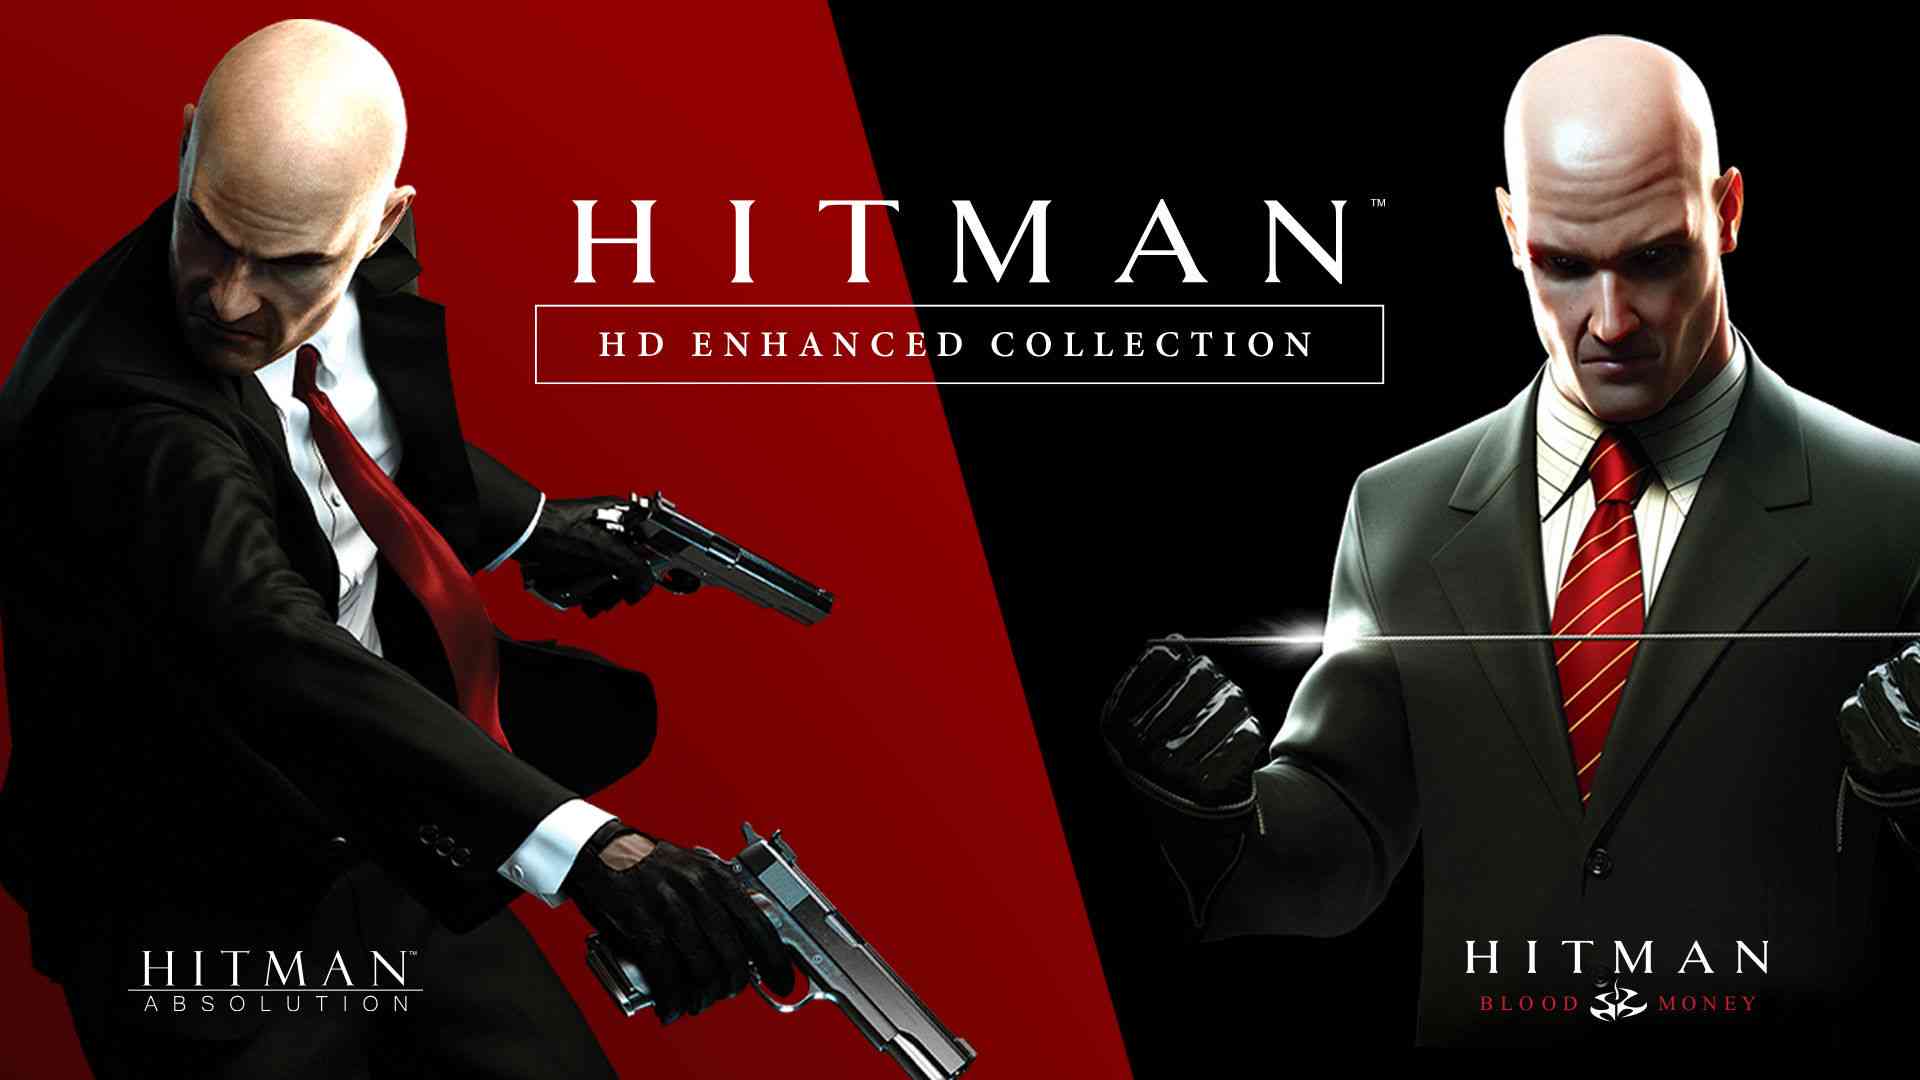 hitman hd enhanced collection is announced 1246 big 1